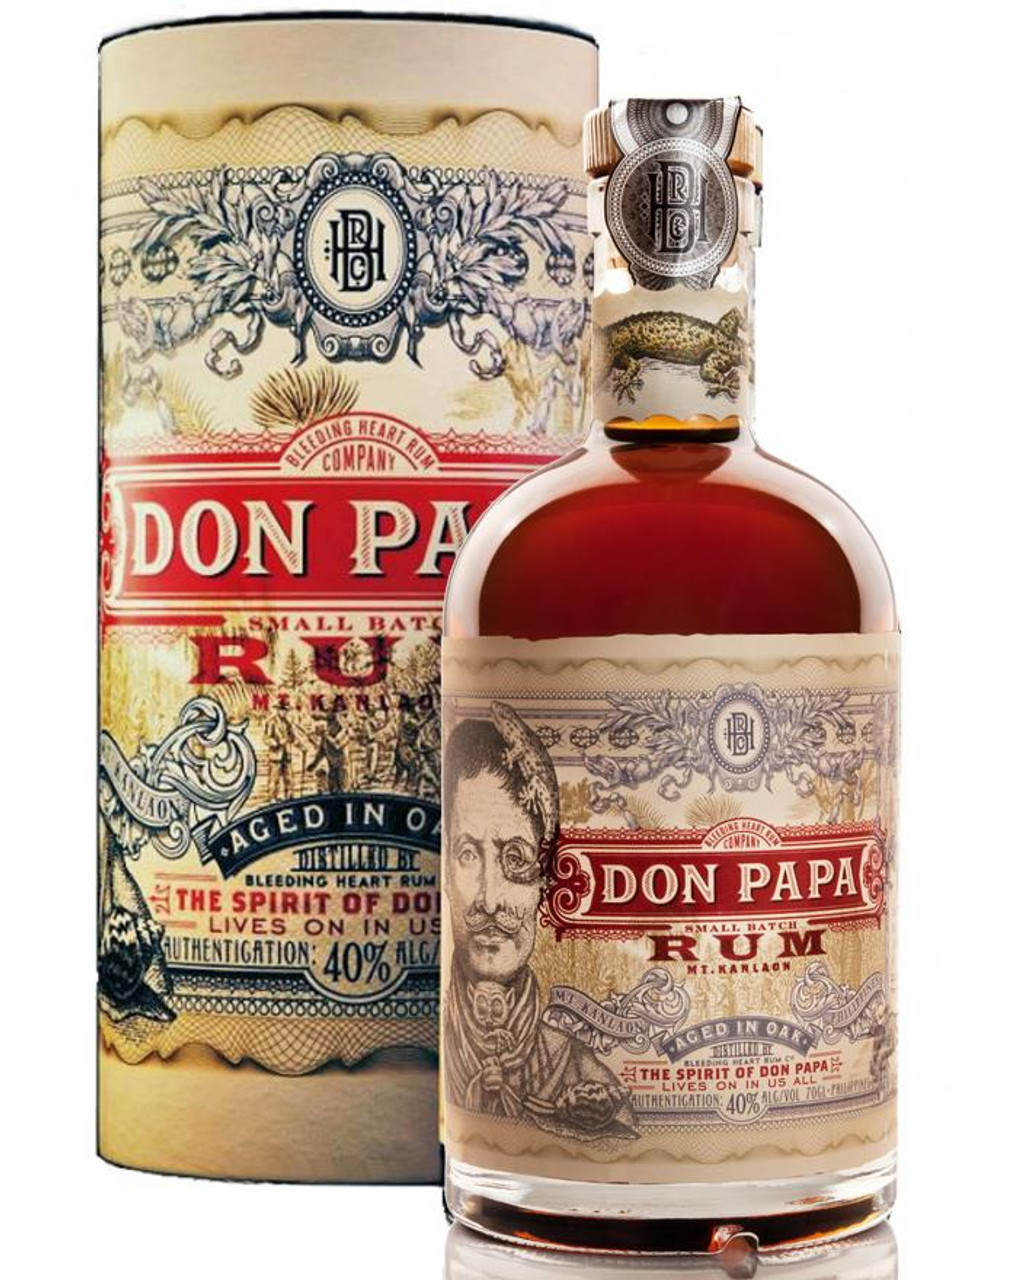 Don Papa small batch rum 80pf 750ml - Glendale Liquor Store